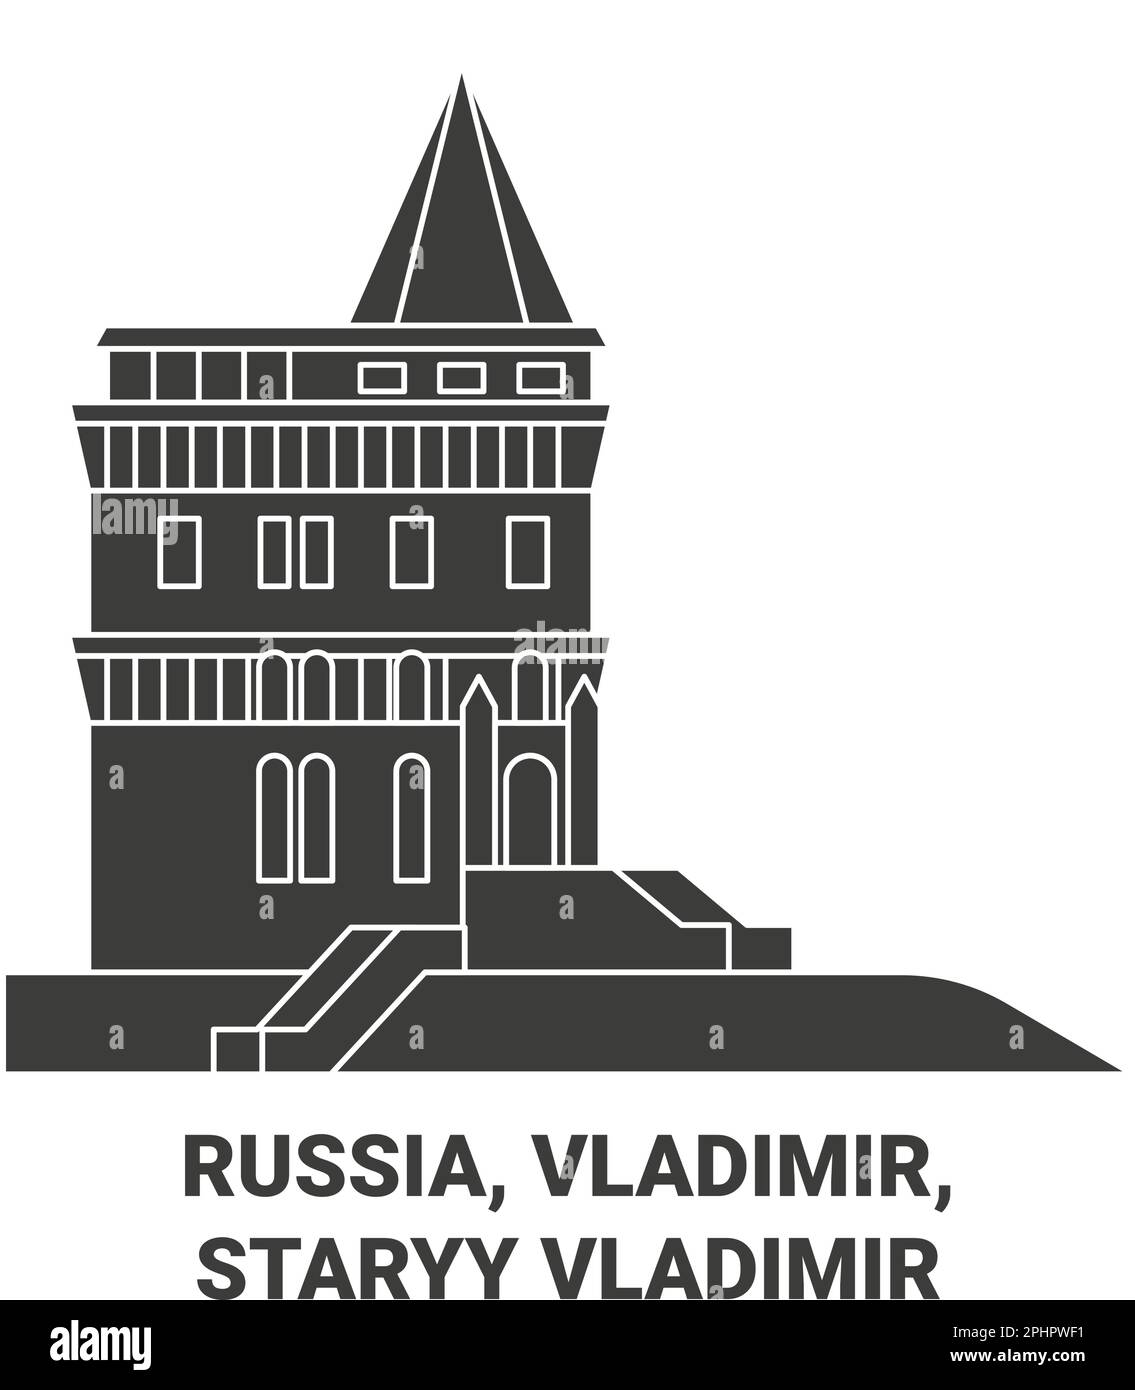 Russie, Vladimir, Staryy Vladimir voyage illustration vectorielle Illustration de Vecteur